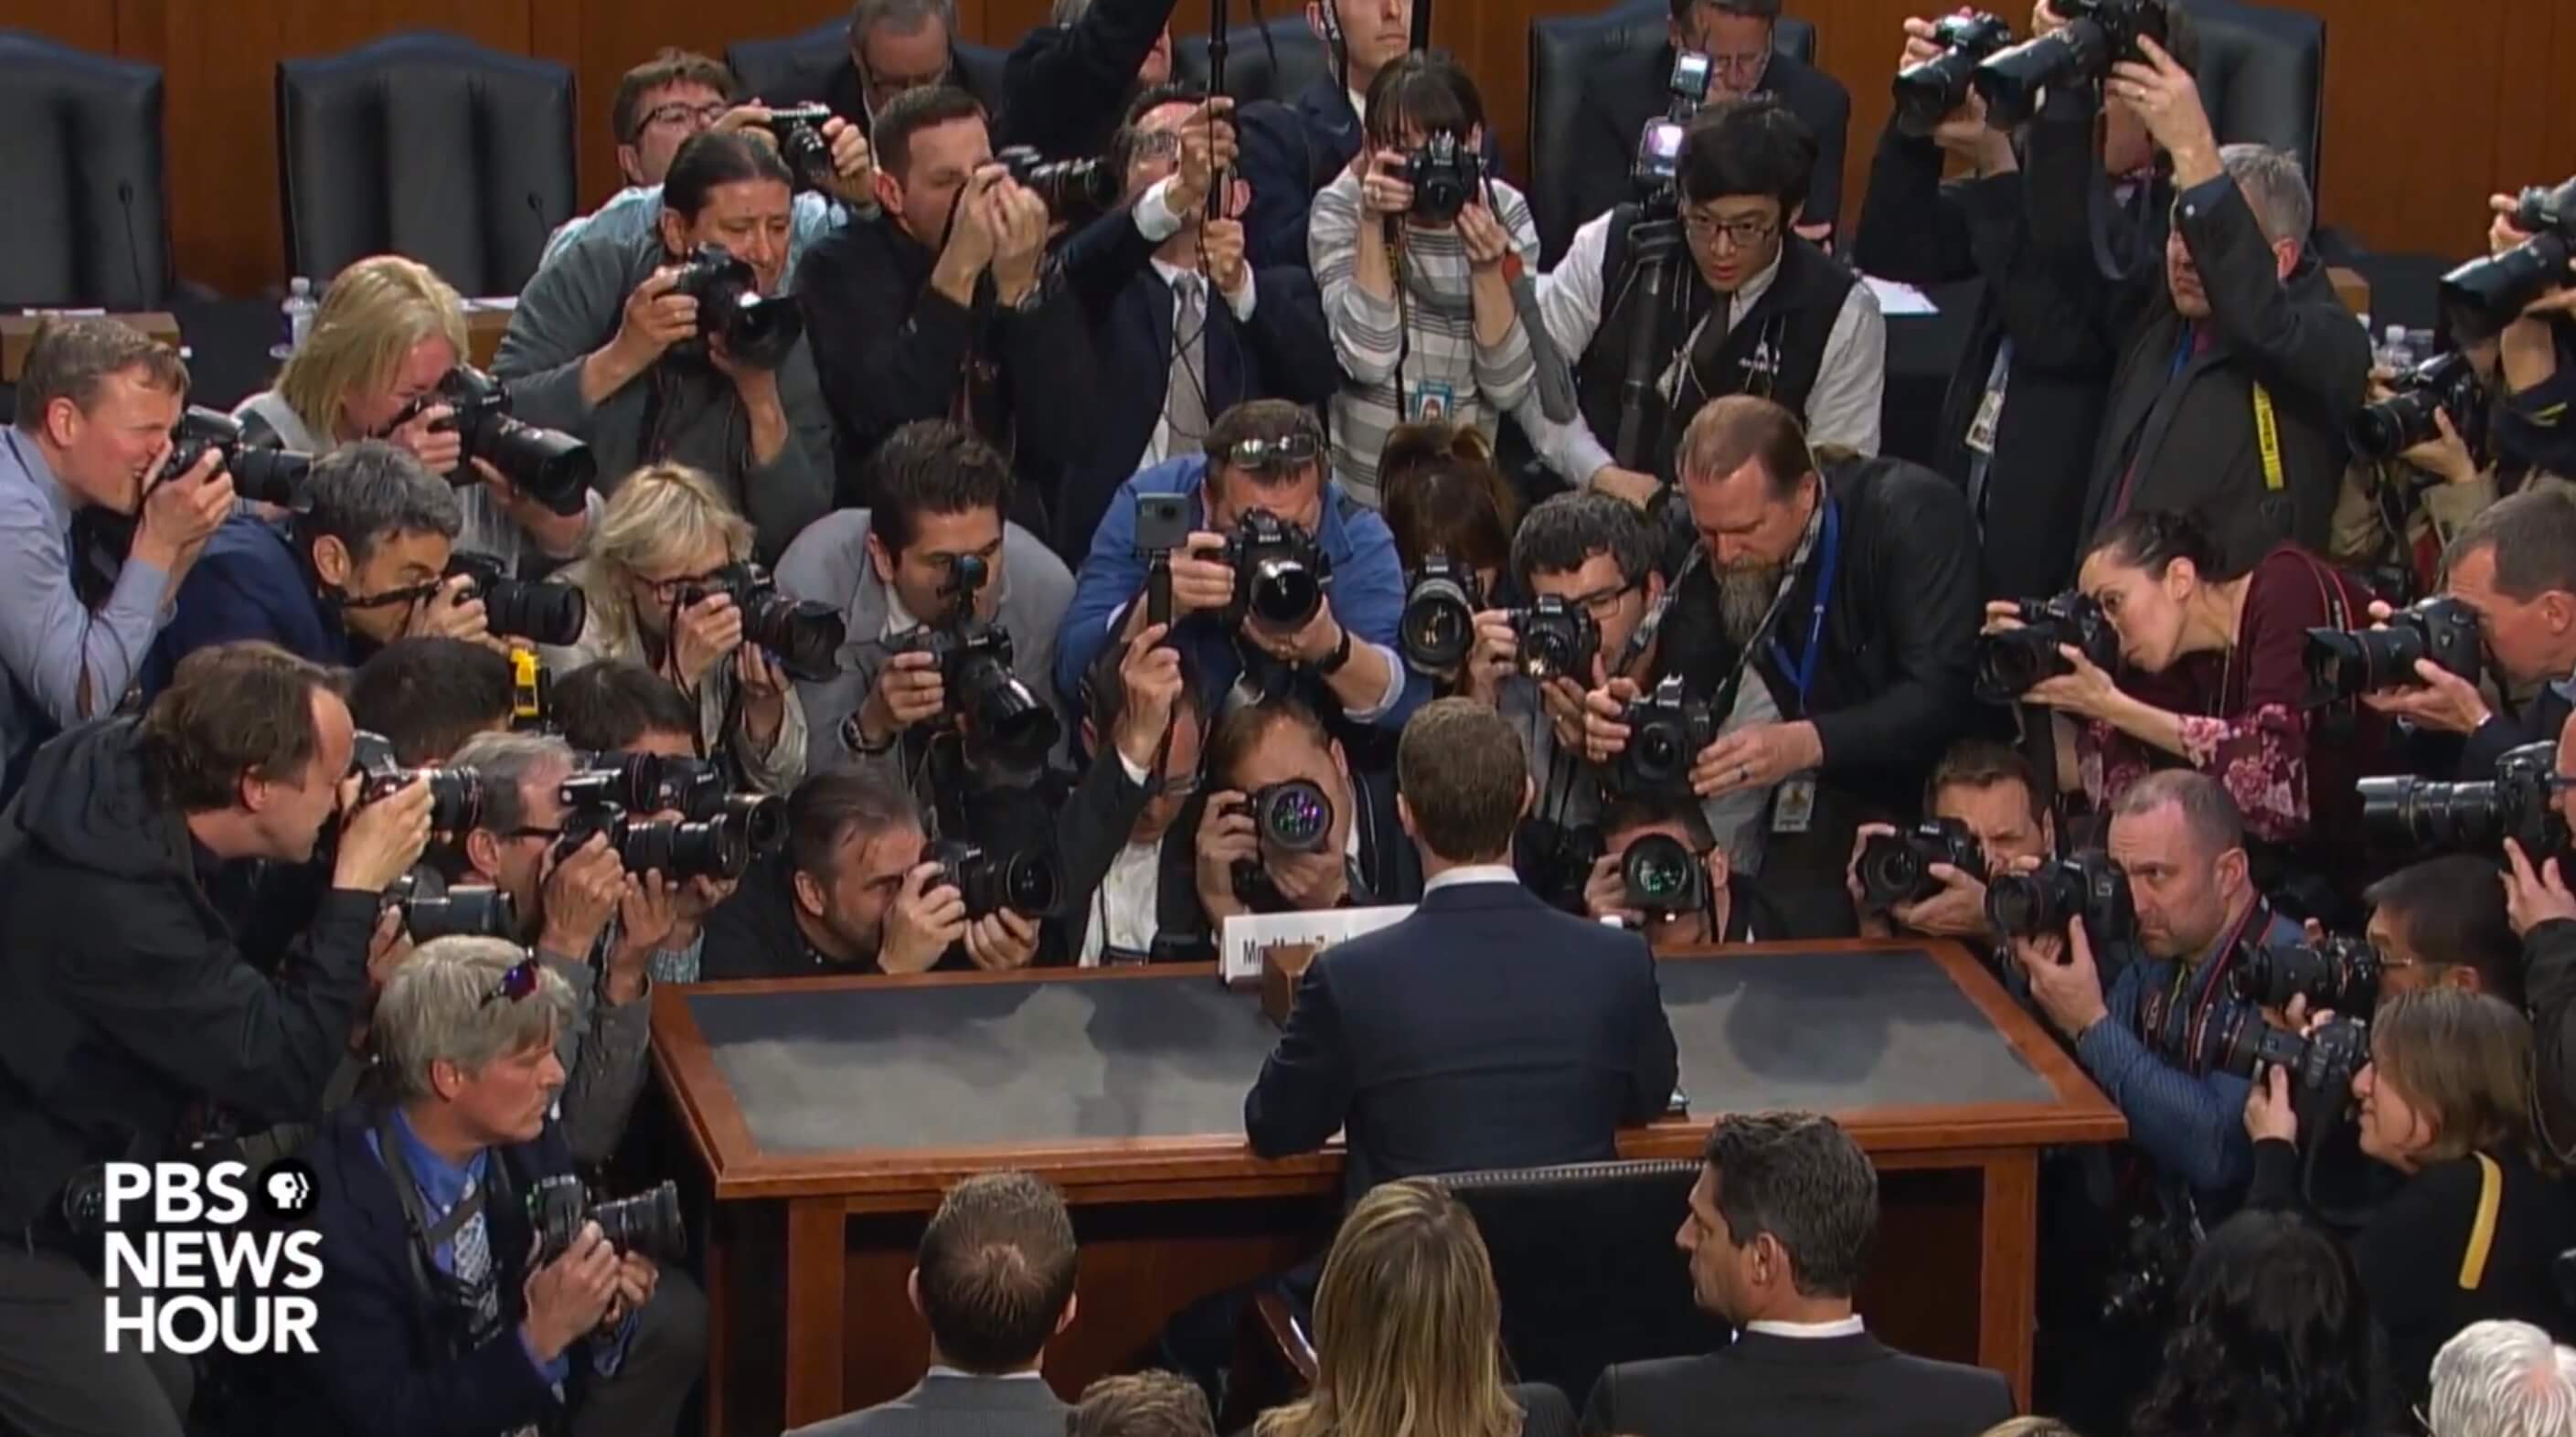 Watch live: Mark Zuckerberg testifying on Facebook users' data before the U.S. Congress